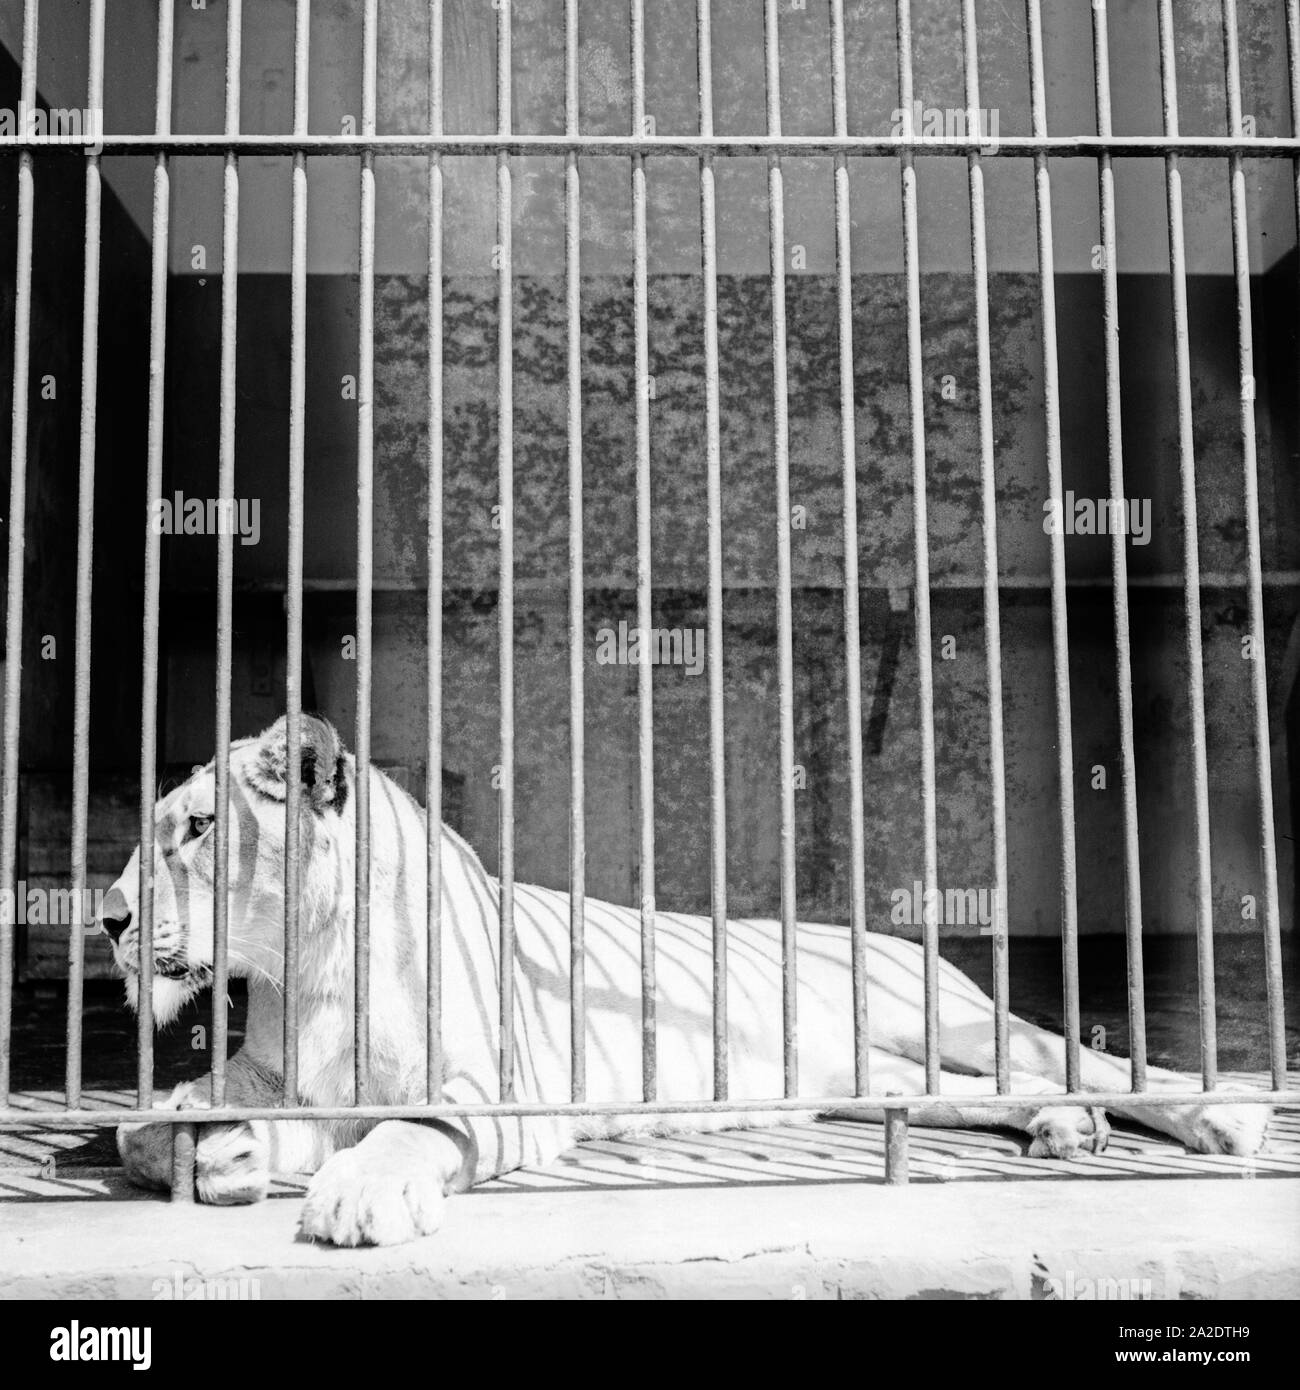 Am Löwenkäfig im Zoo, Deutschland 1930er Jahre. Lion at its cage at the zoo, Germany 1930s. Stock Photo